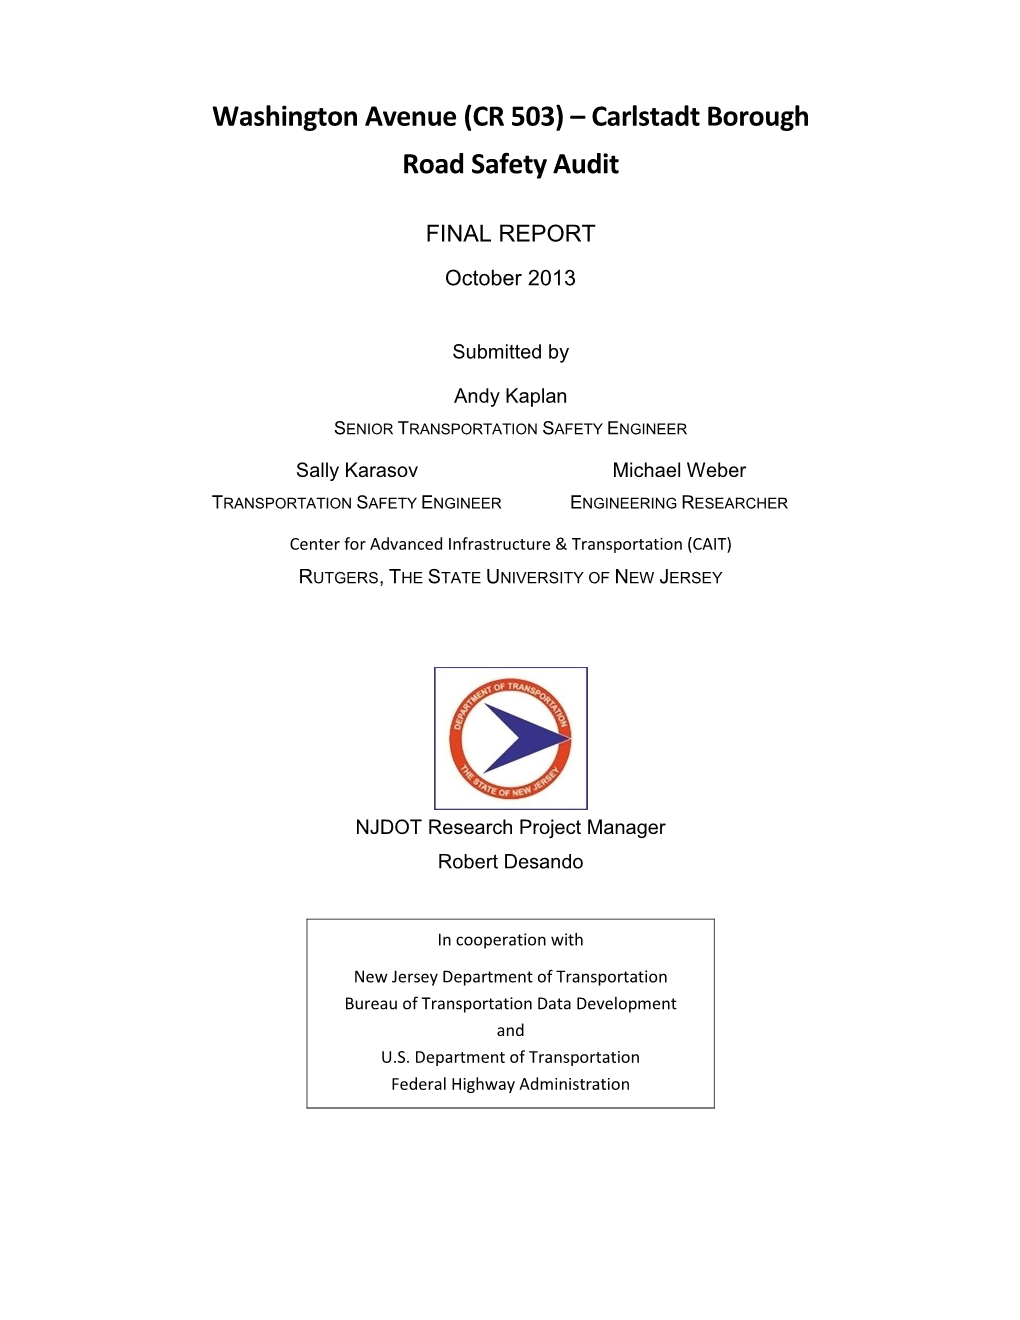 Washington Avenue (CR 503) – Carlstadt Borough Road Safety Audit